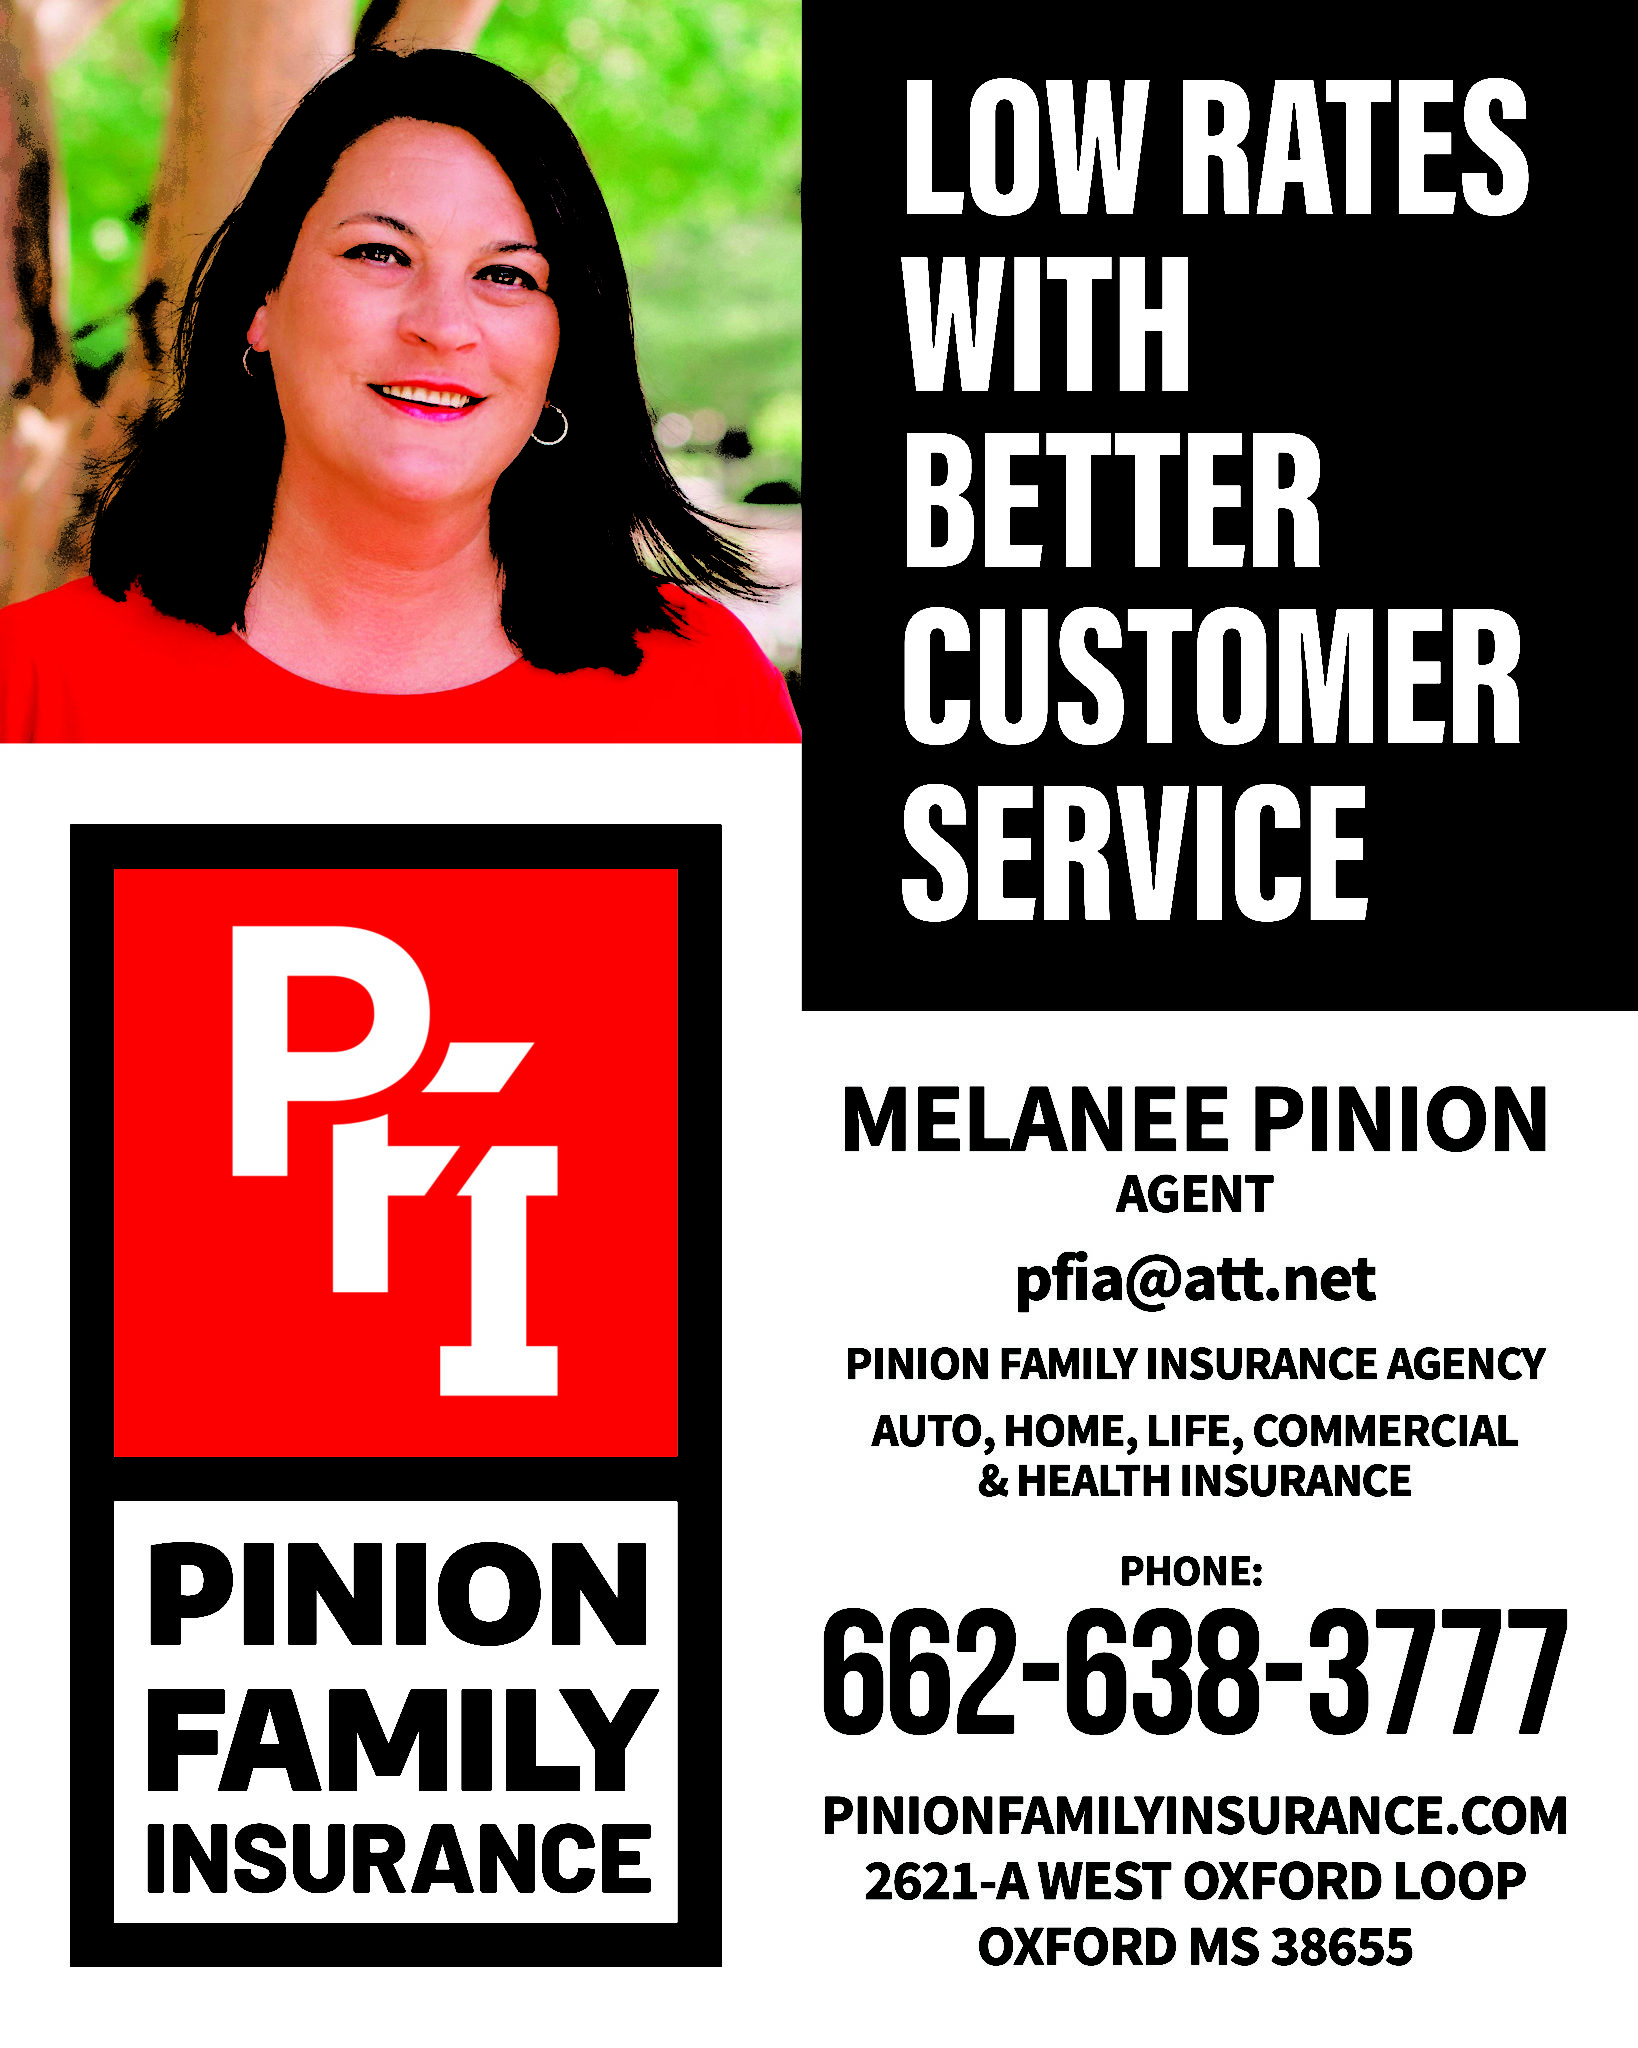 Pinion-Family-Insurance-Revised-1-2019-1.jpg